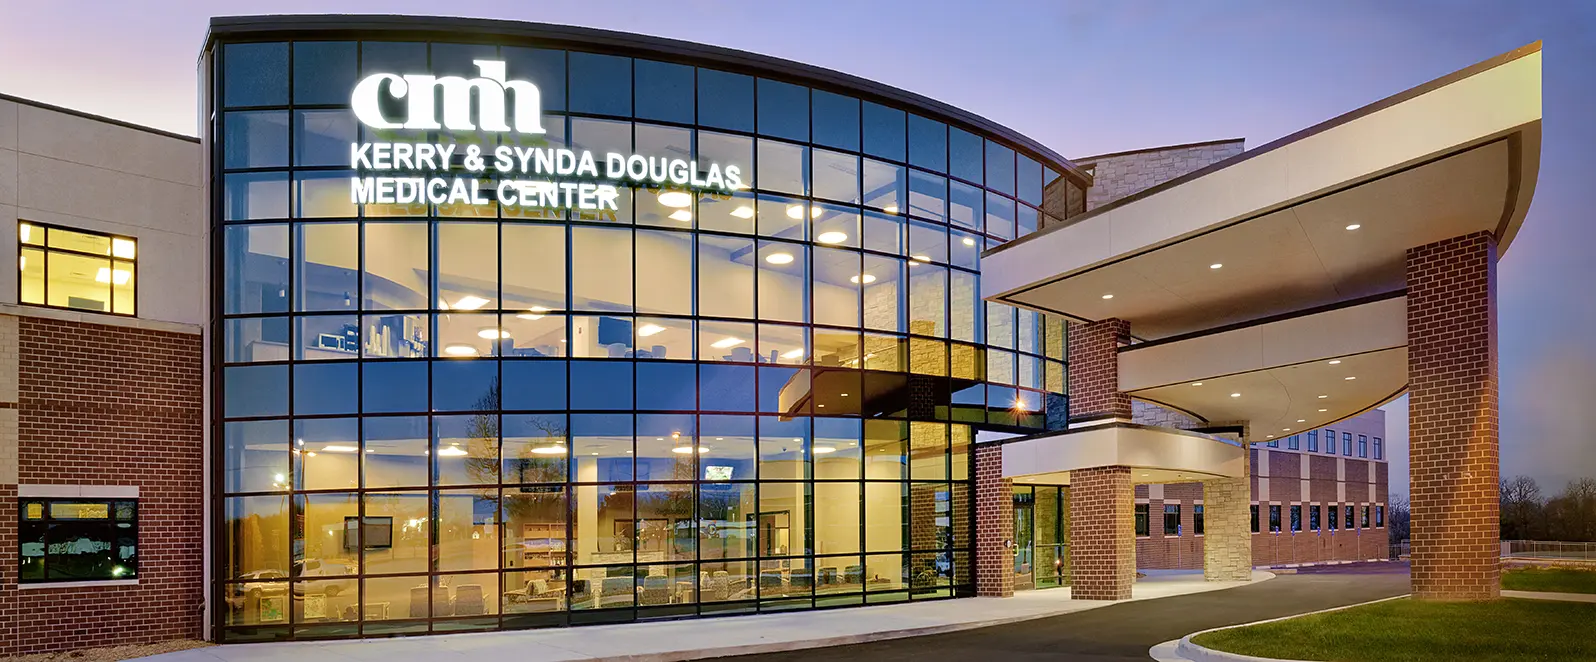 CMH Optical Shop (inside CMH Eye Specialty Center) building exterior